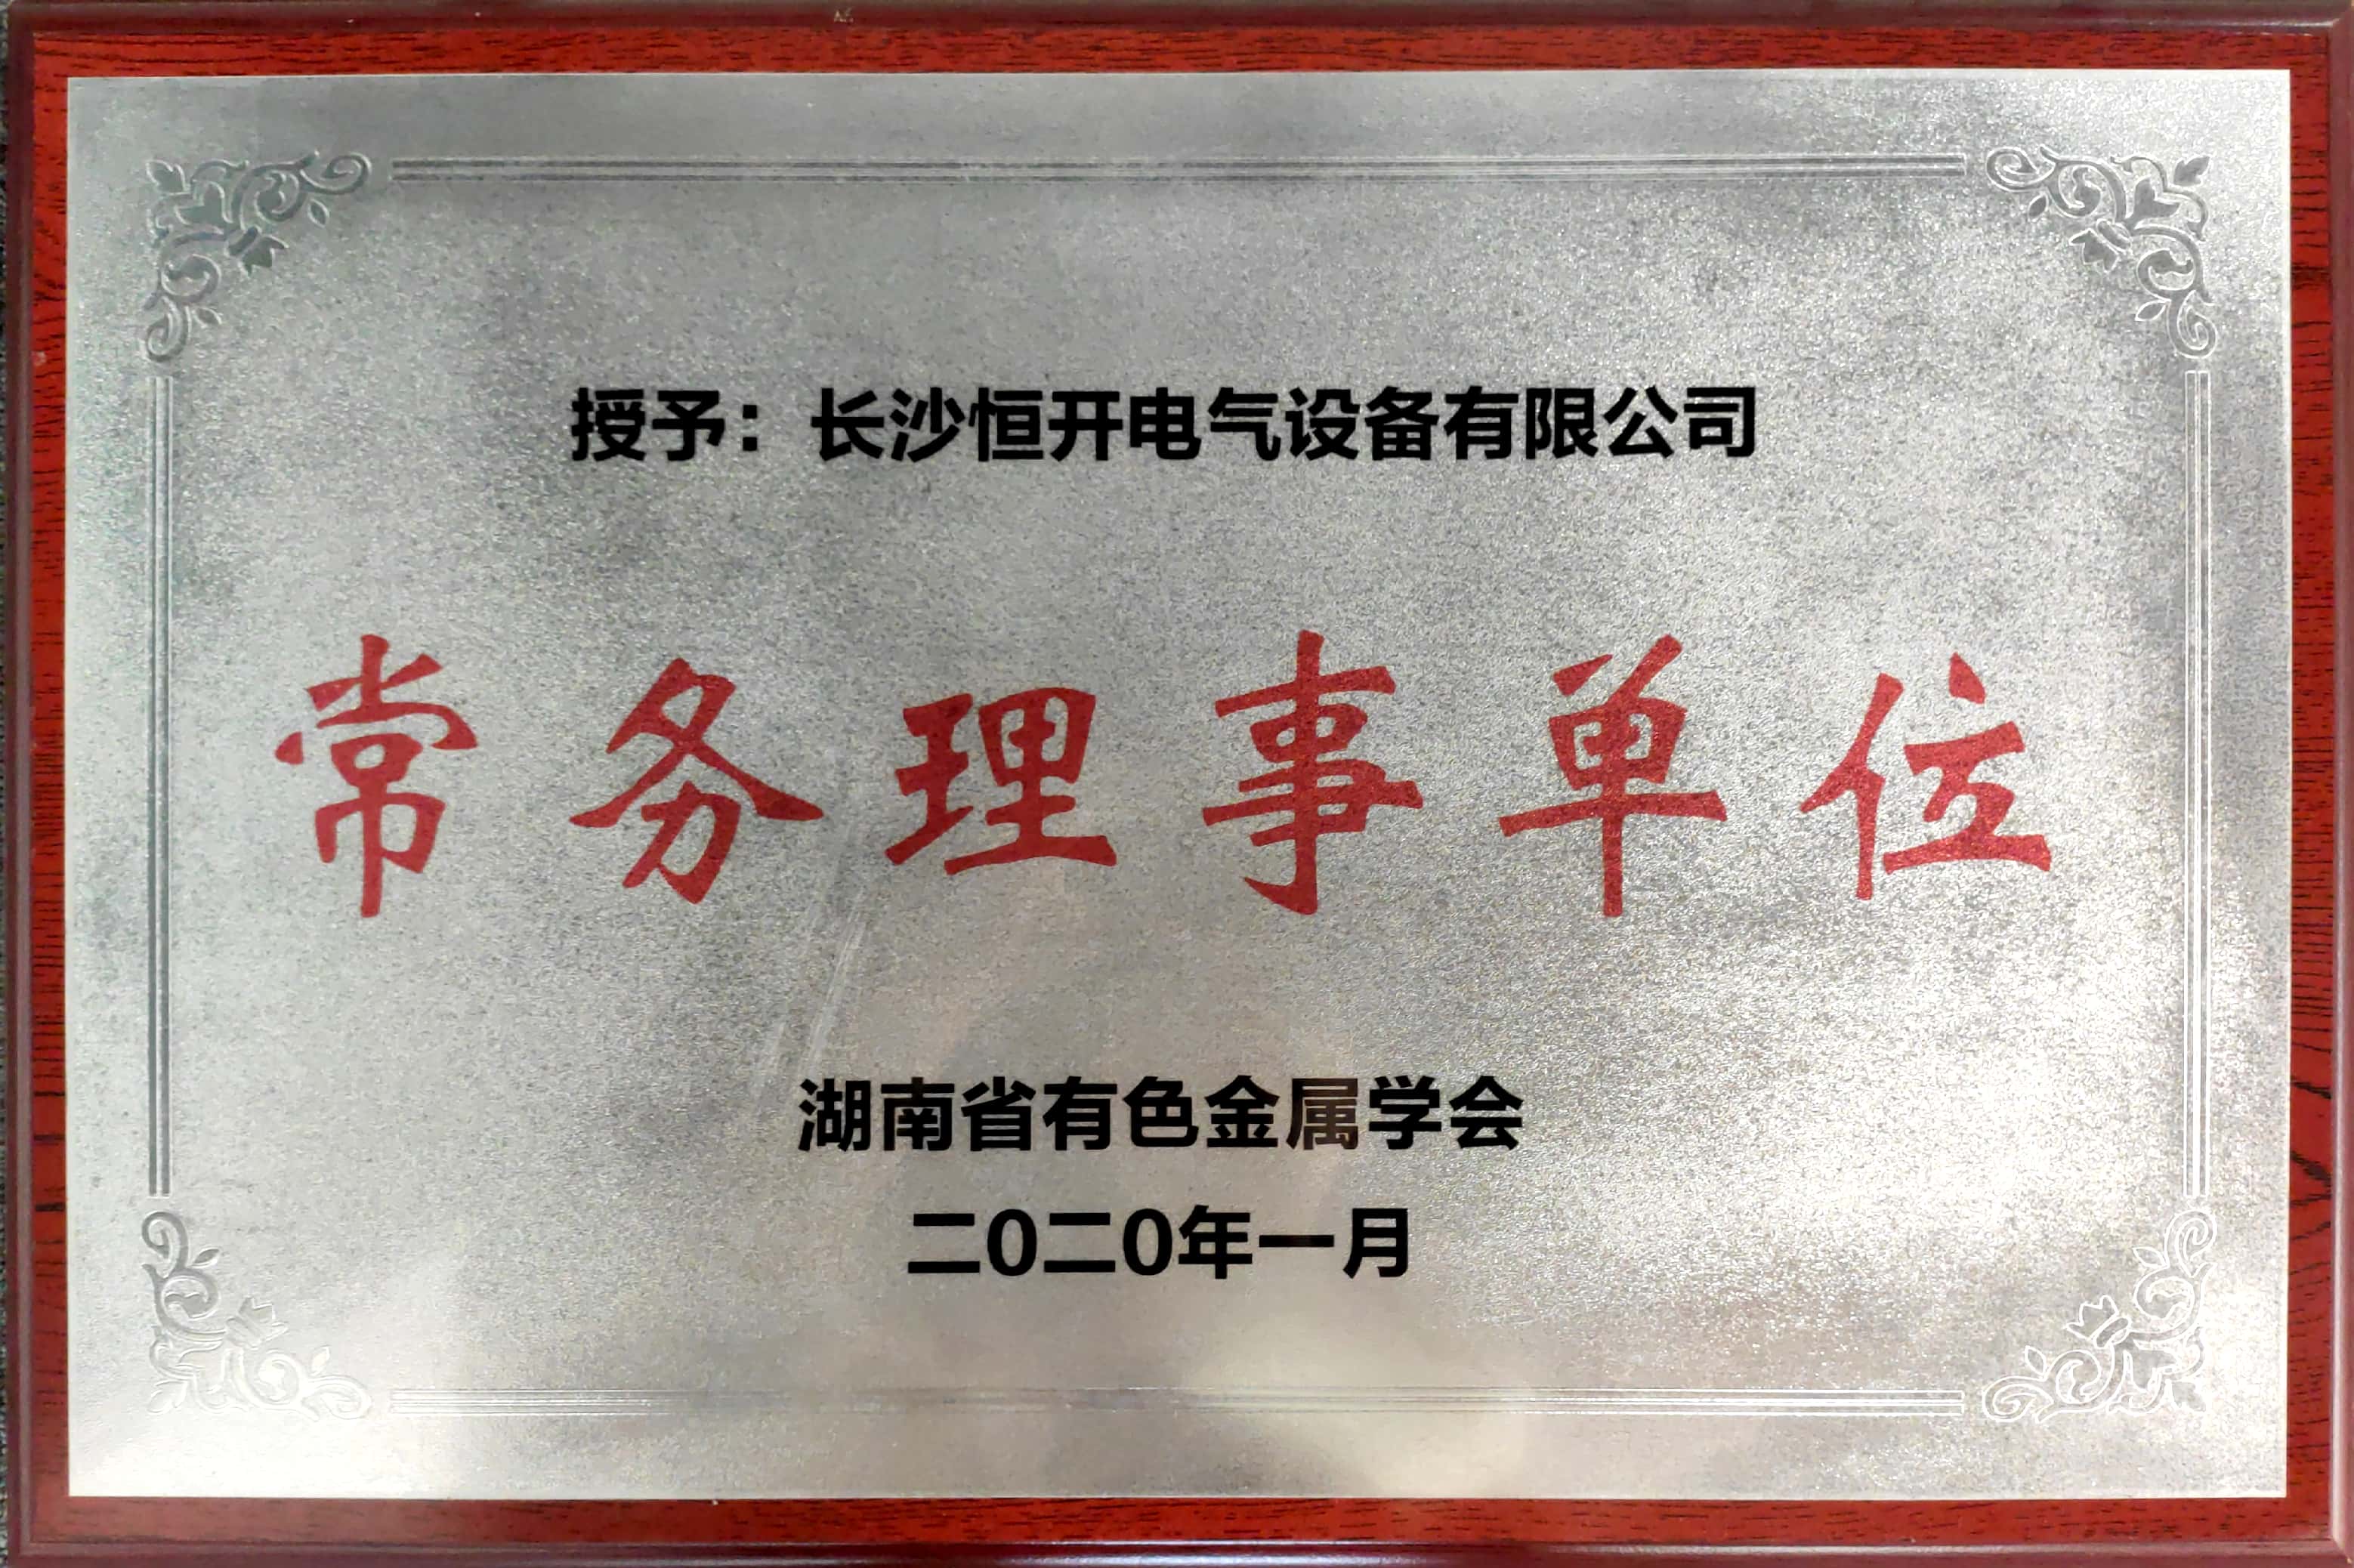 Hunan Nonferrous Metals Society: Standing Director Unit